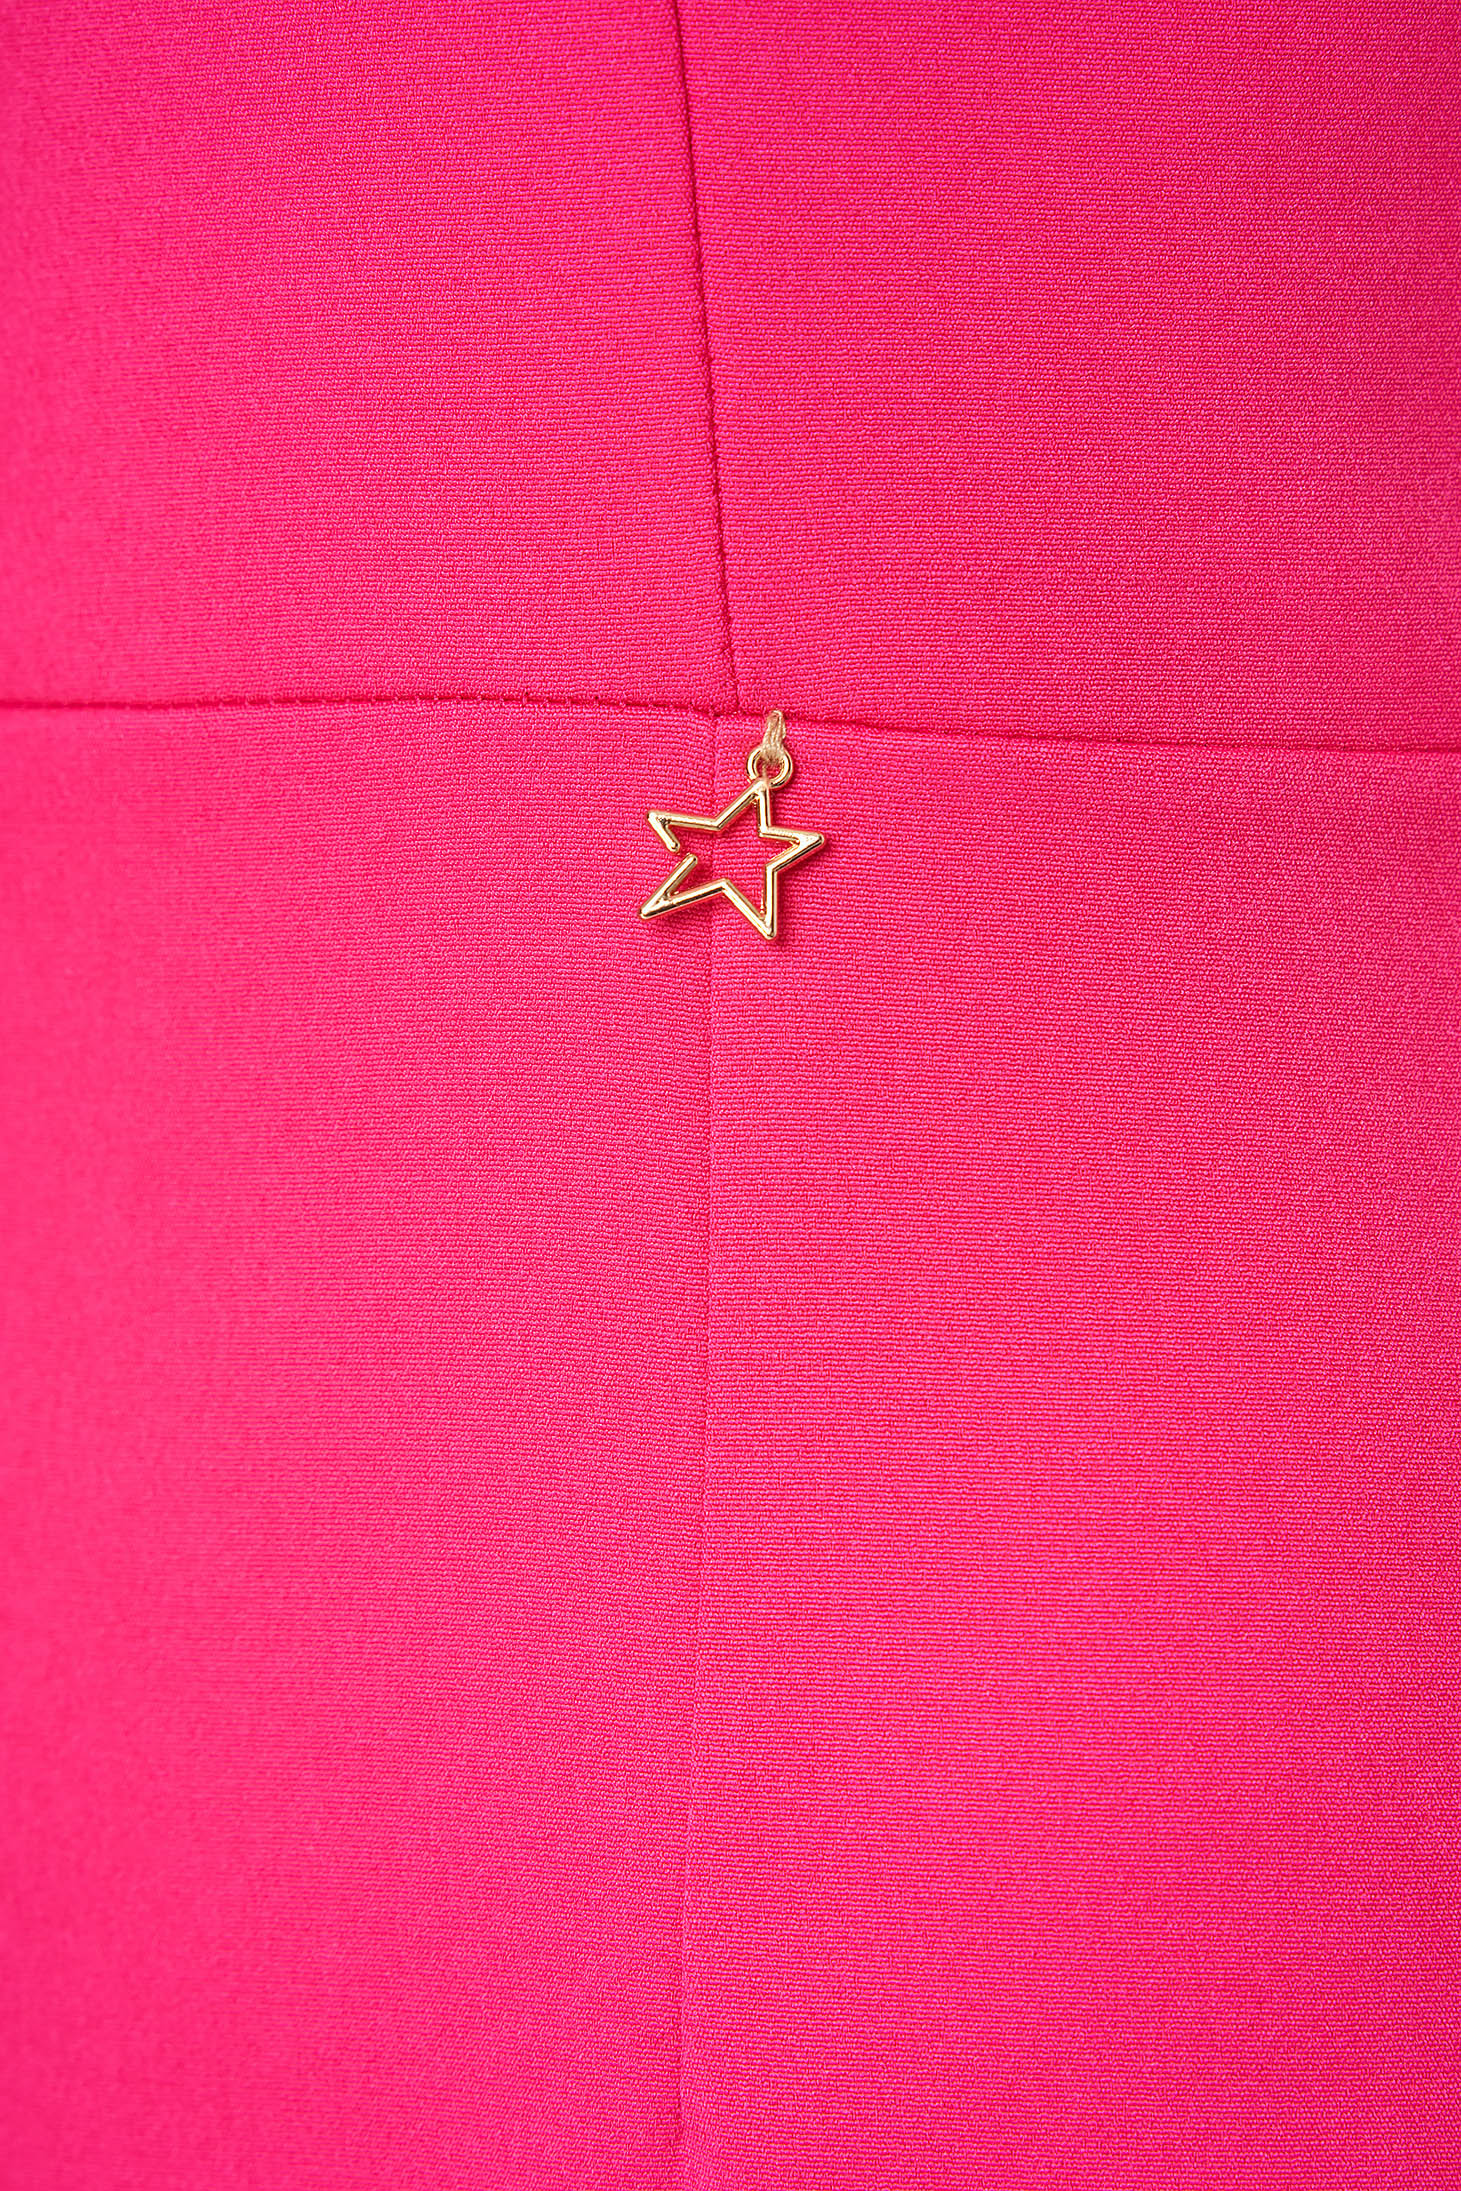 Fuchsia Sleeveless Pencil Dress made of slightly stretchy fabric - StarShinerS 6 - StarShinerS.com